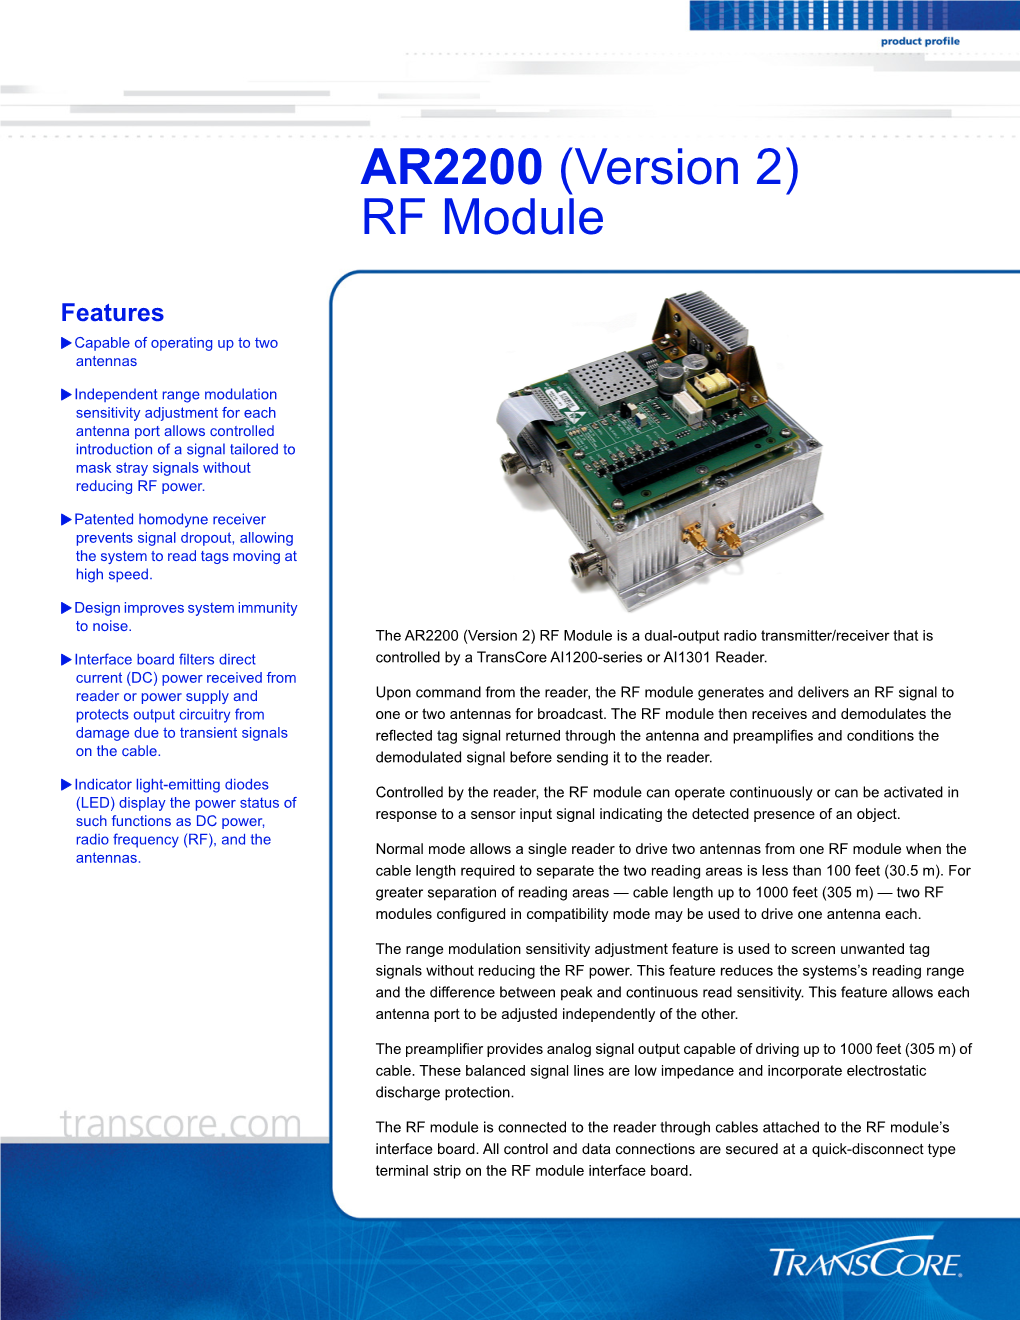 AR2200 (Version 2) RF Module